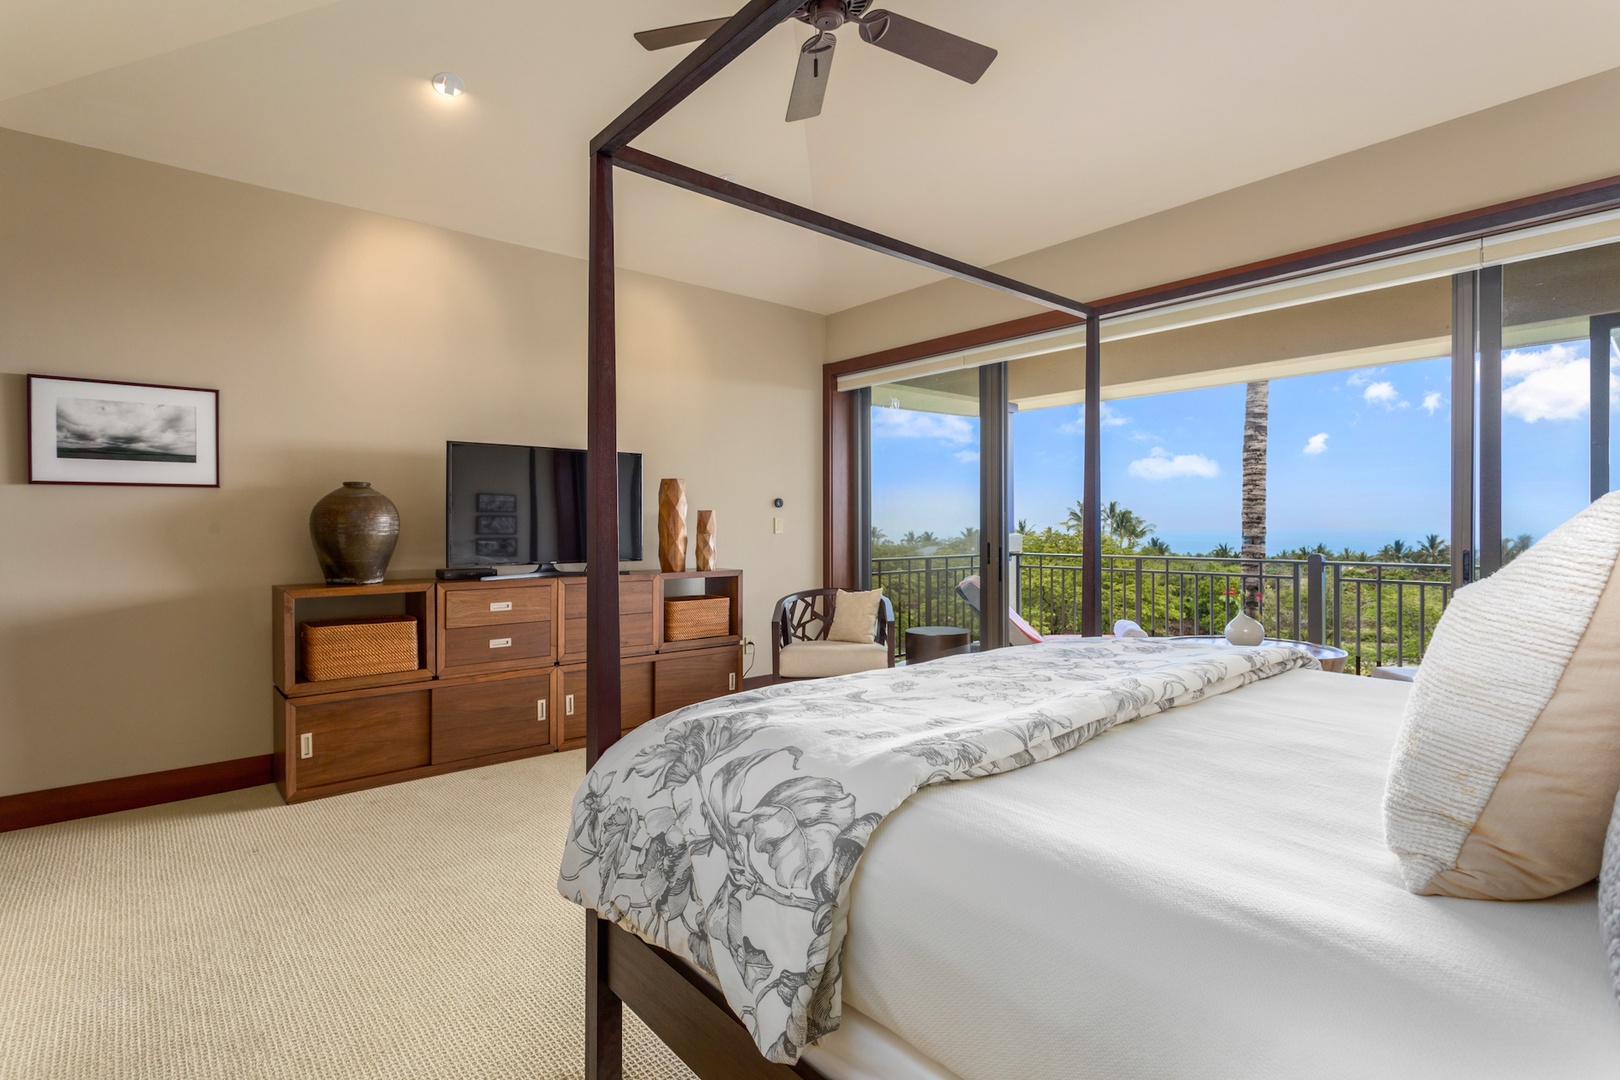 Kailua Kona Vacation Rentals, 3BD Hainoa Villa (2901D) at Four Seasons Resort at Hualalai - Blue skies and ocean views from the decadent king-sized primary bed.